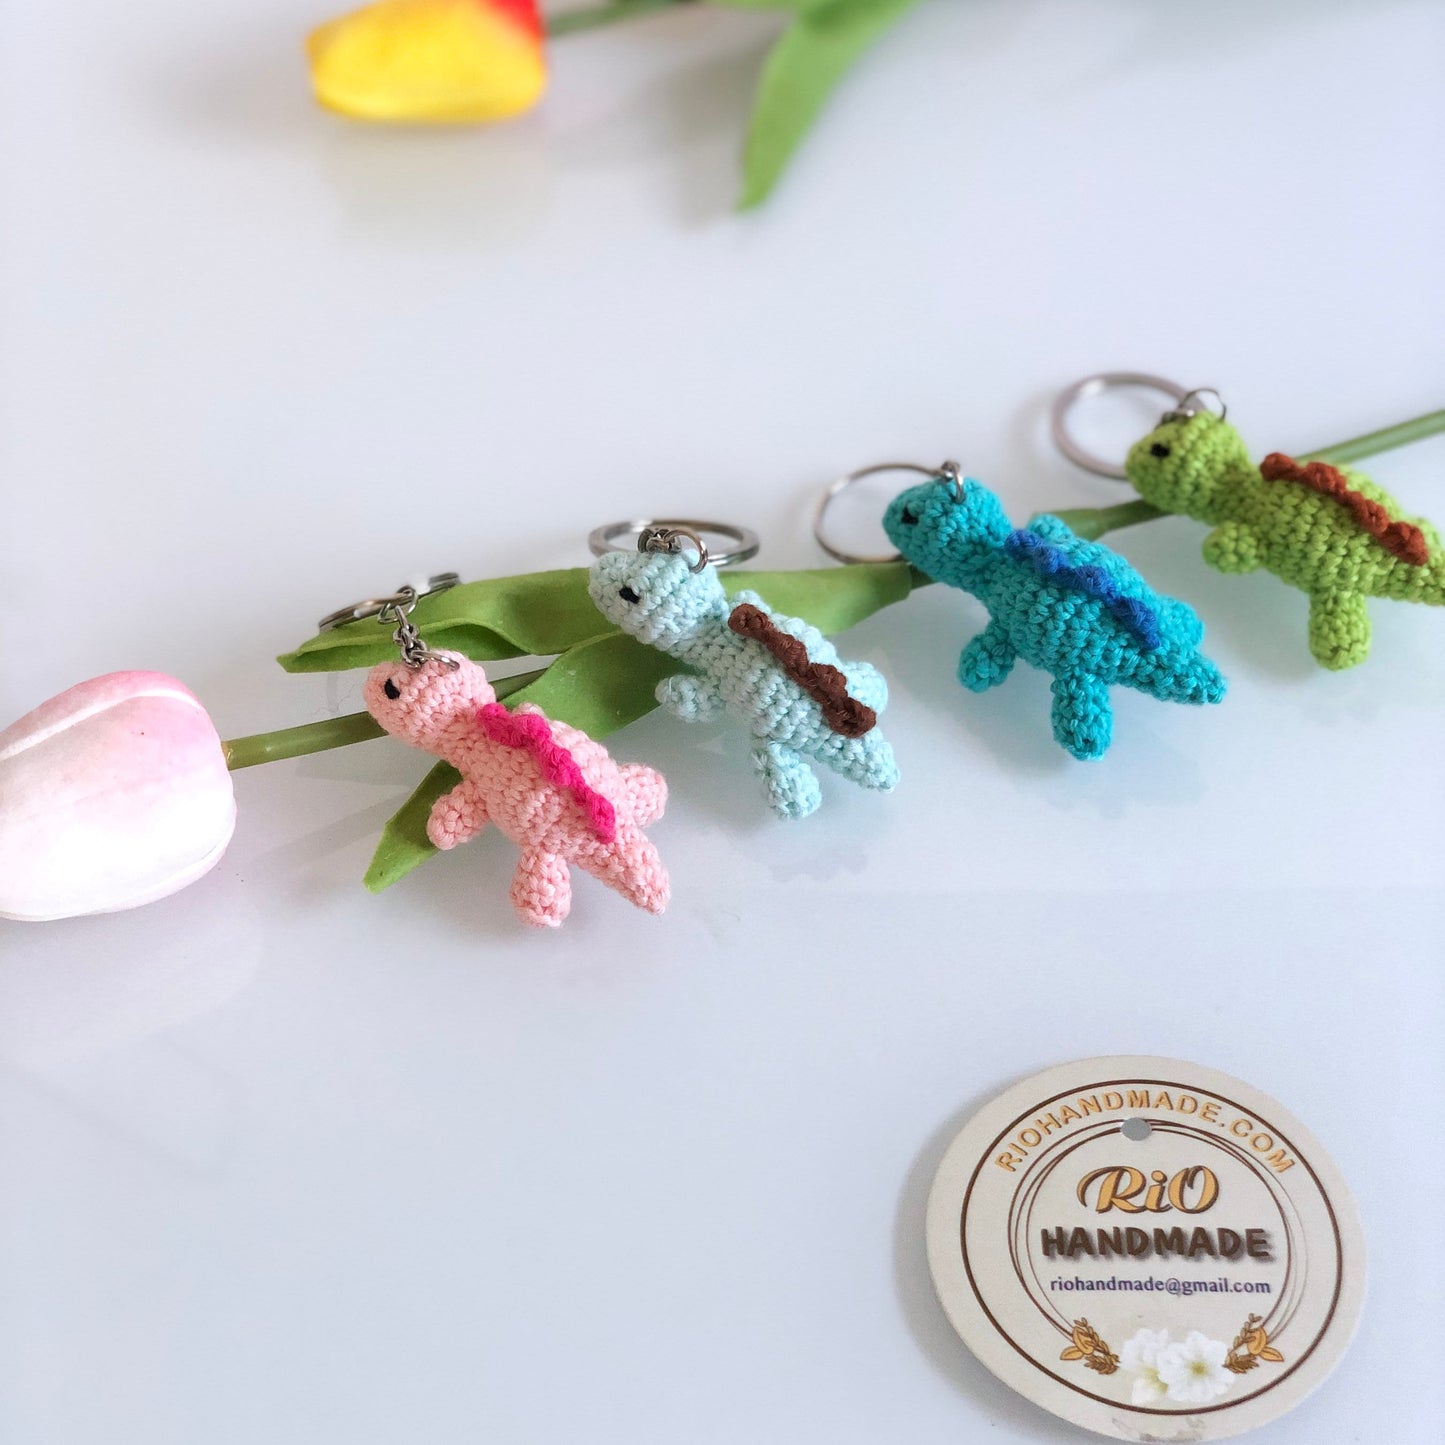 Handmade tiny sleepy Baby Dinosaur keychain, crochet Dinosaur, amigurumi Dinosaur, plushie toy, gift, ornament, keychain.